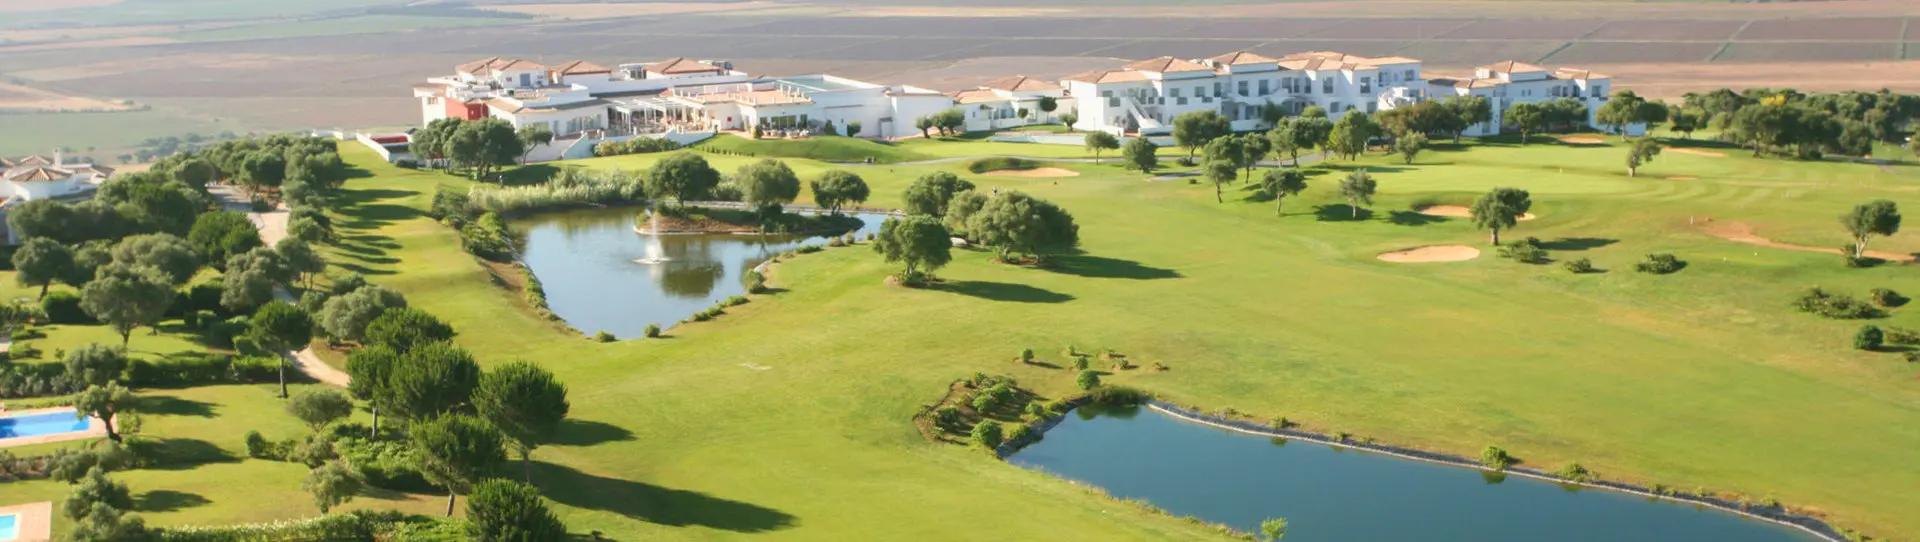 Spain Golf Driving Range - Campo de practicas Fairplay Golf - Photo 2